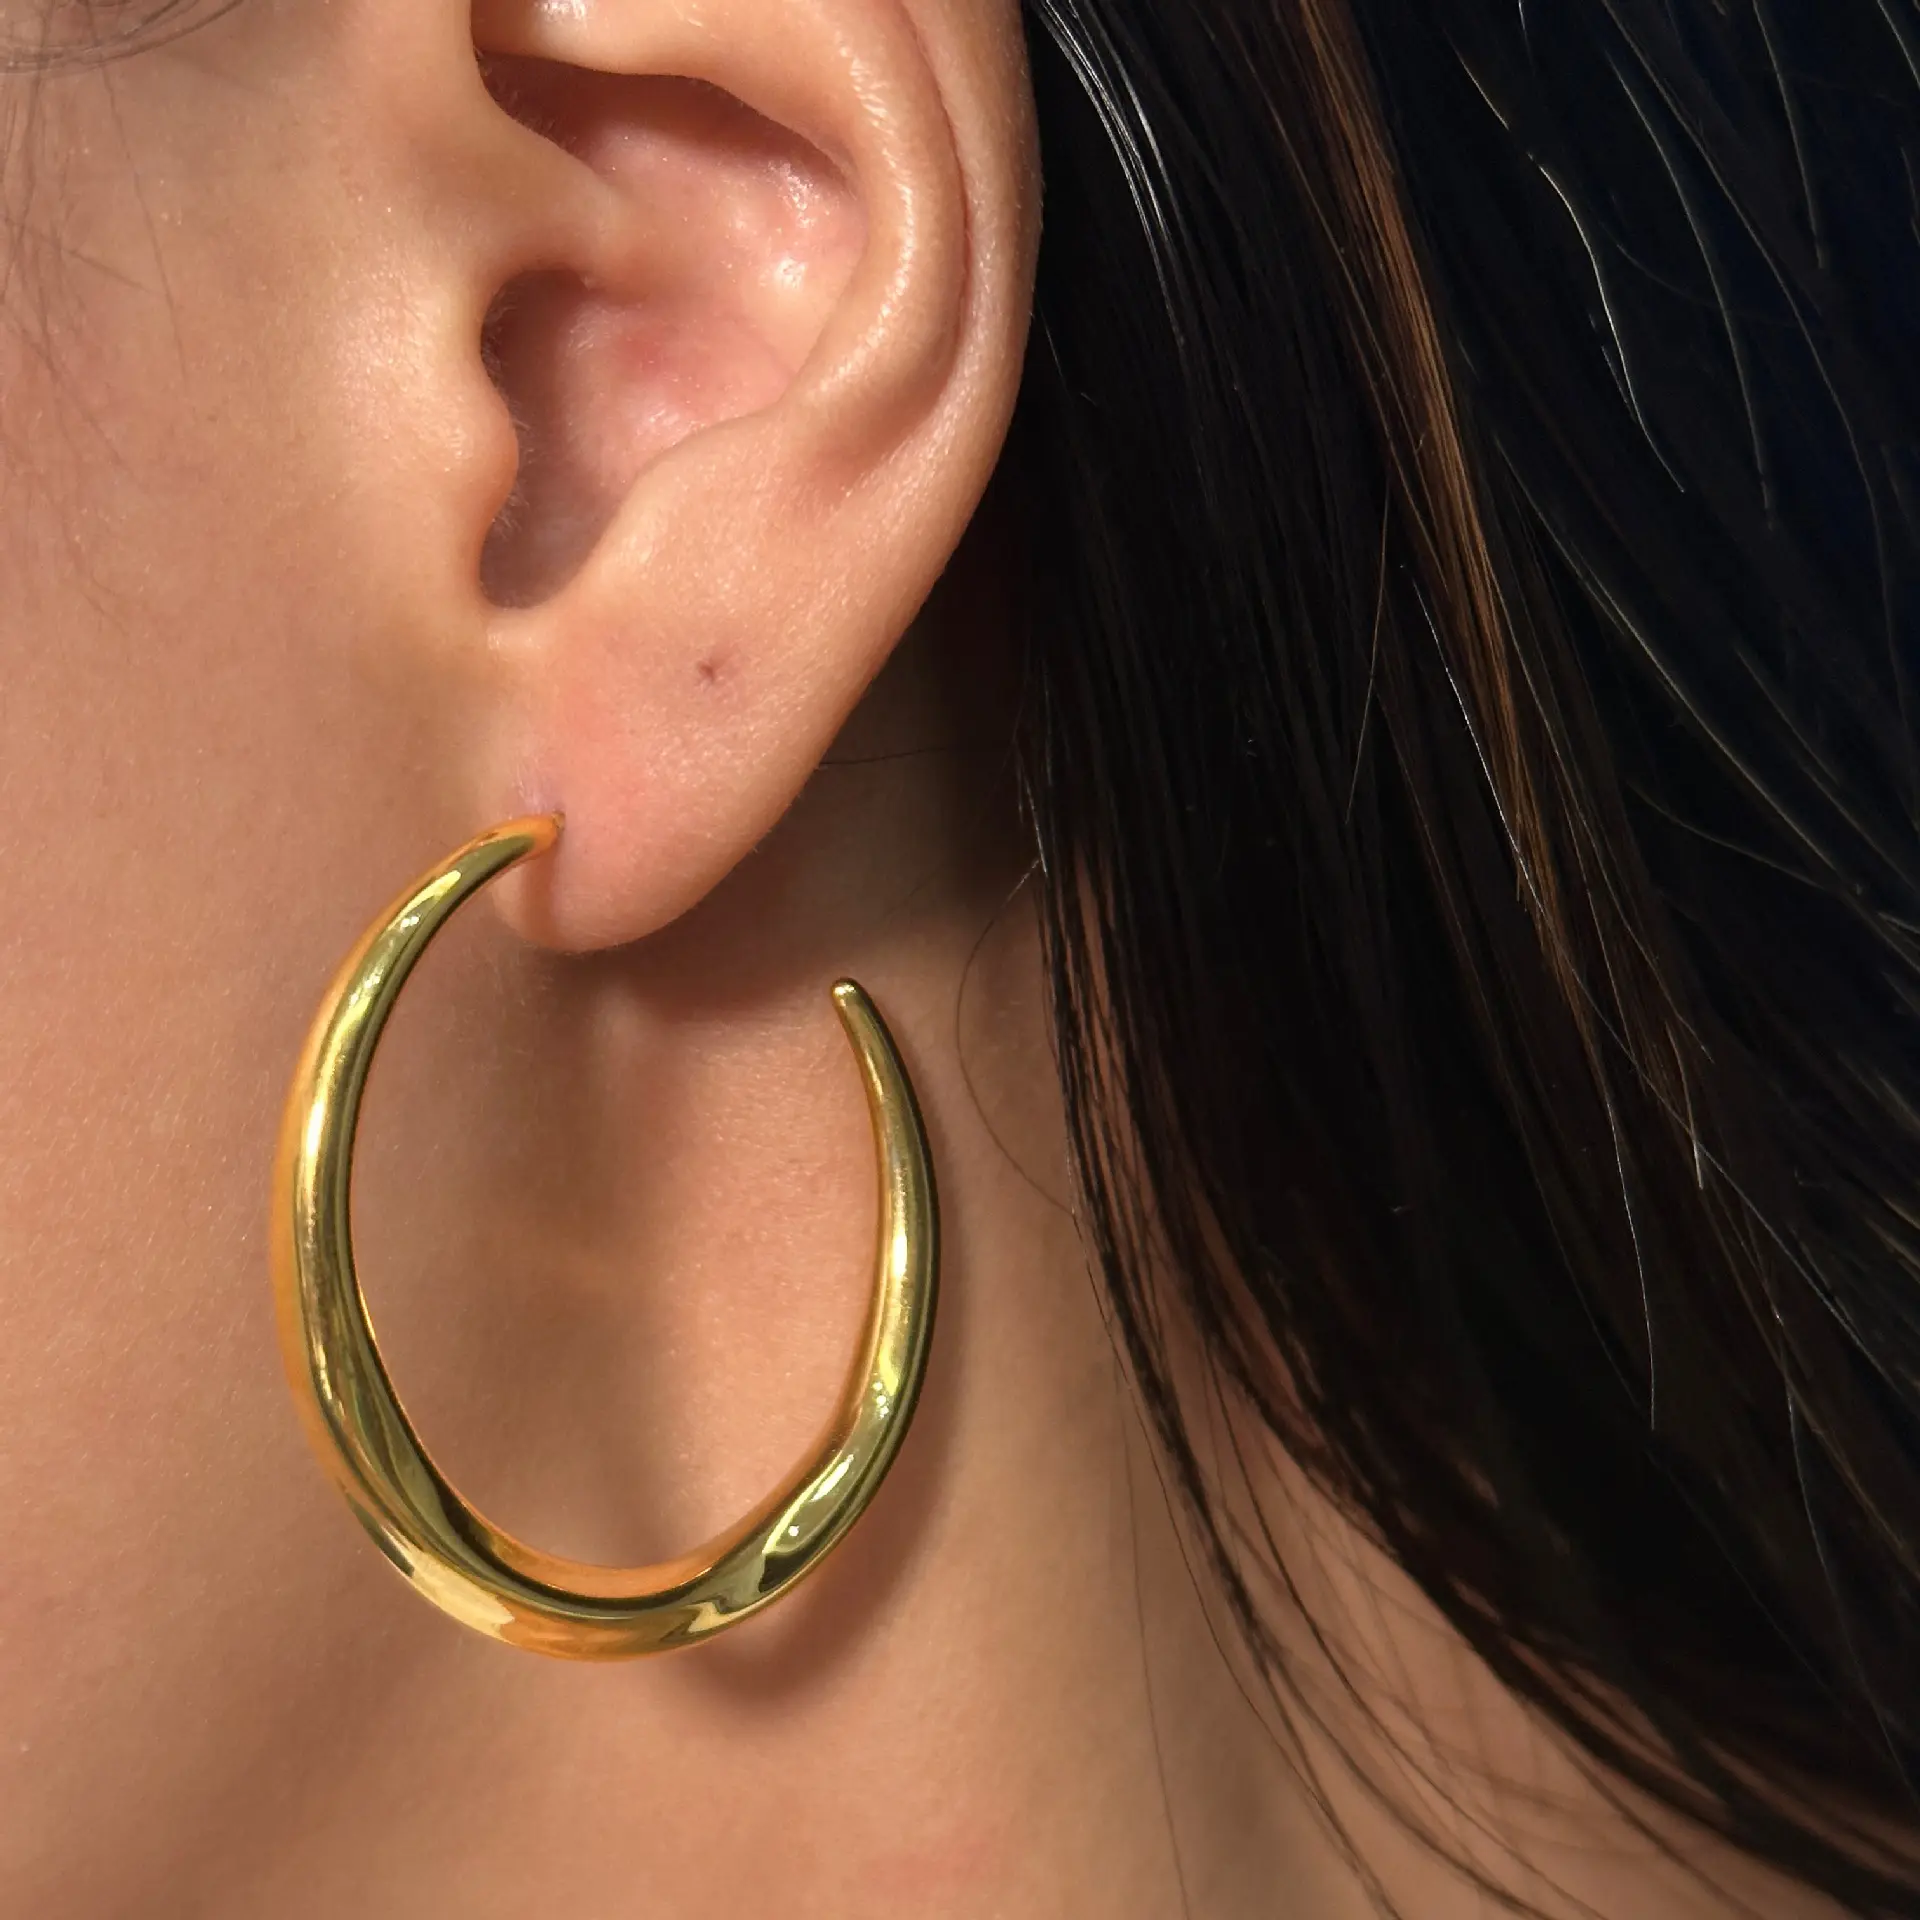 Ins custom earrings jewelry irregular gold hoop earrings stainless steel fashion fine jewelry twisted large hoops for girls